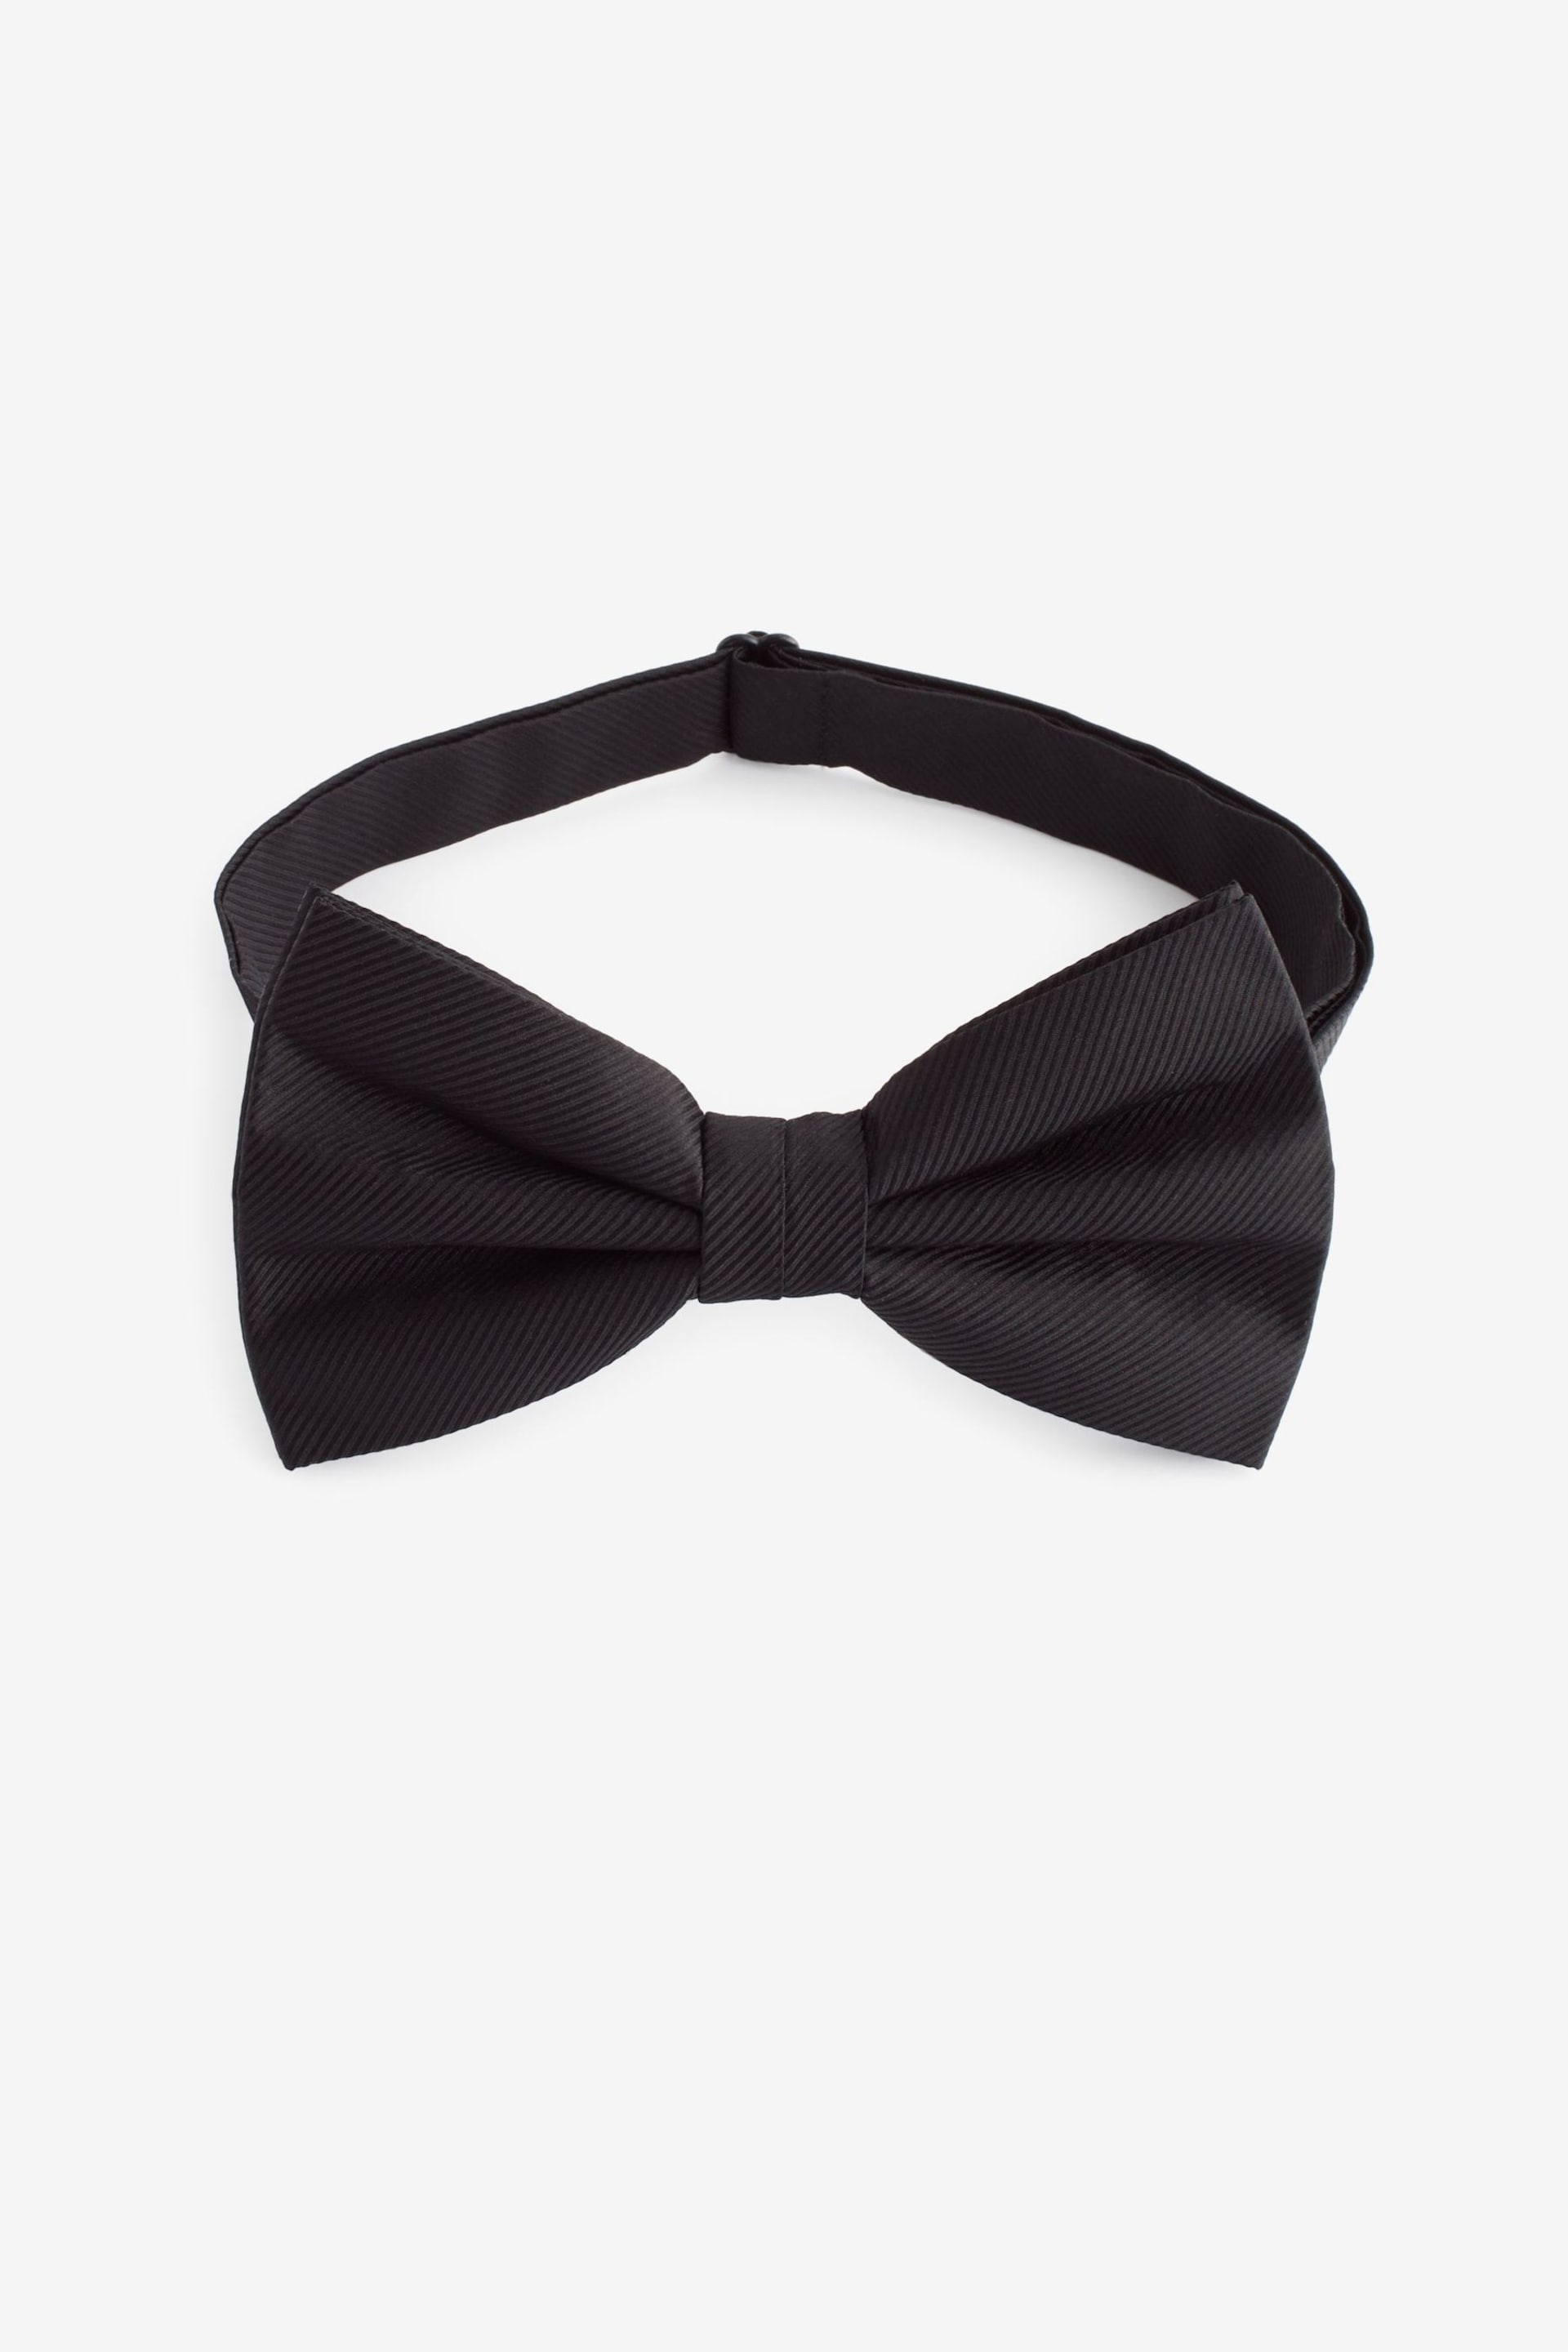 Black Twill Silk Bow Tie - Image 2 of 3